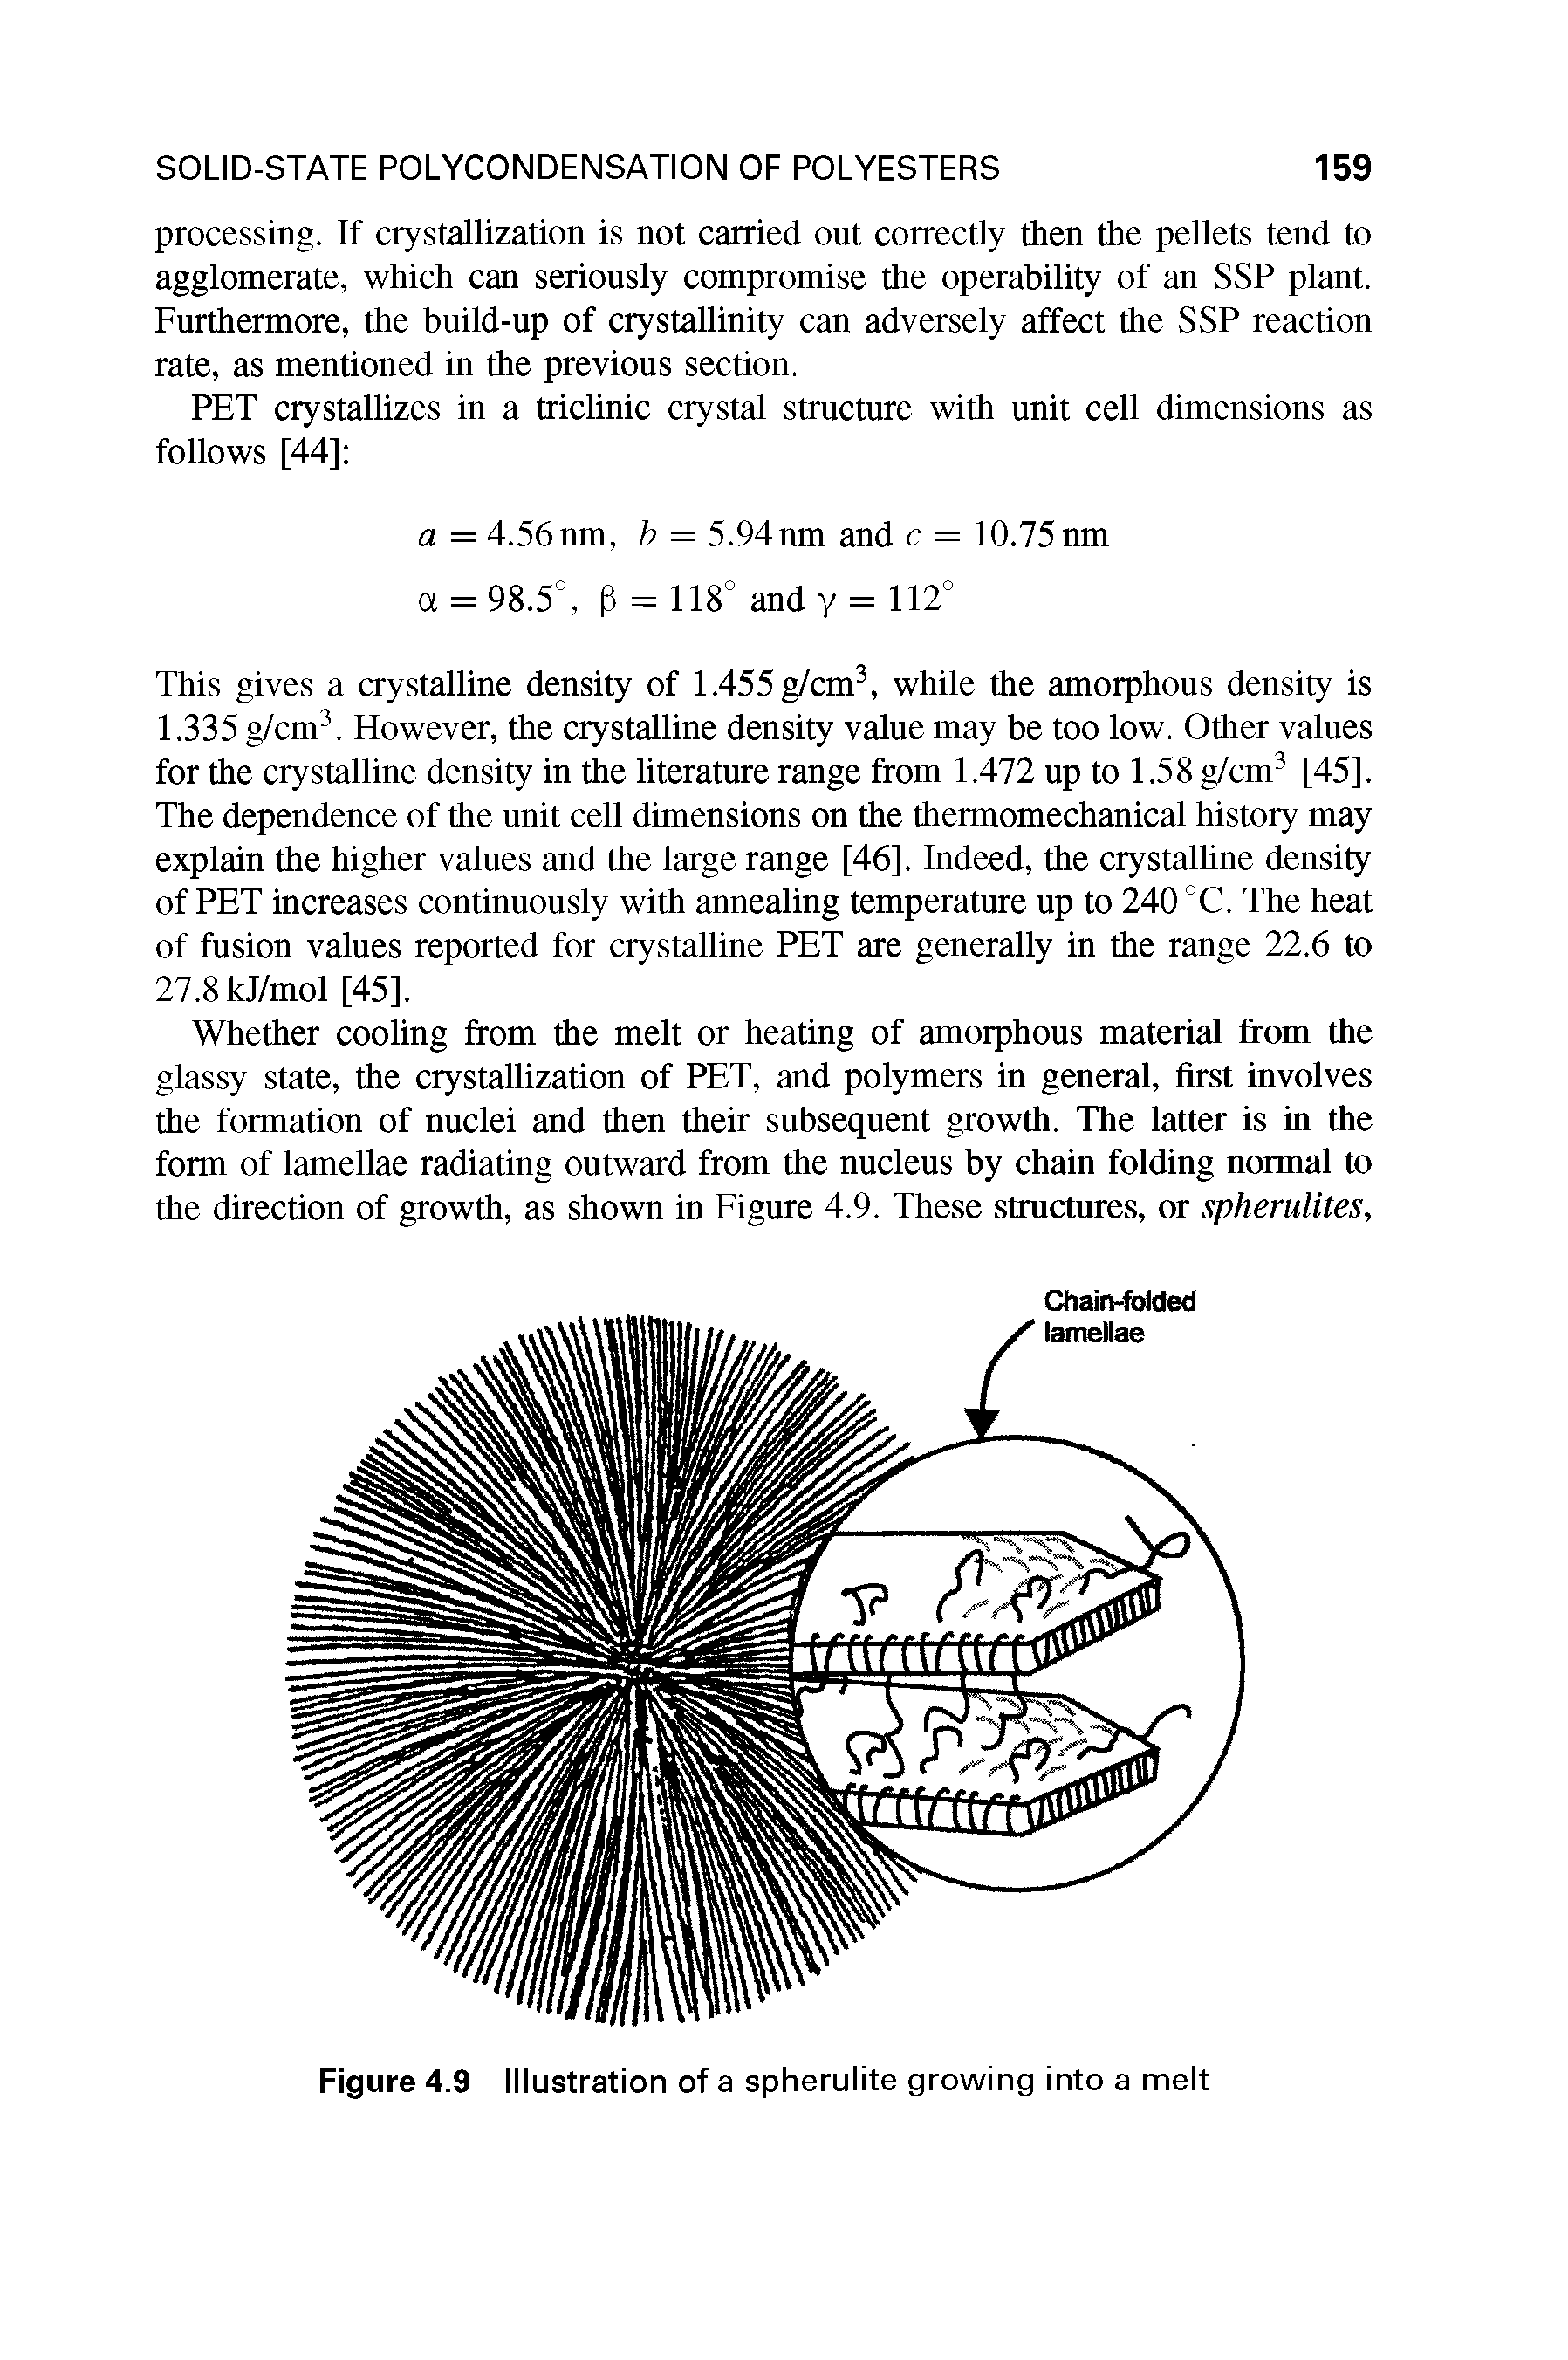 Figure 4.9 Illustration of a spherulite growing into a melt...